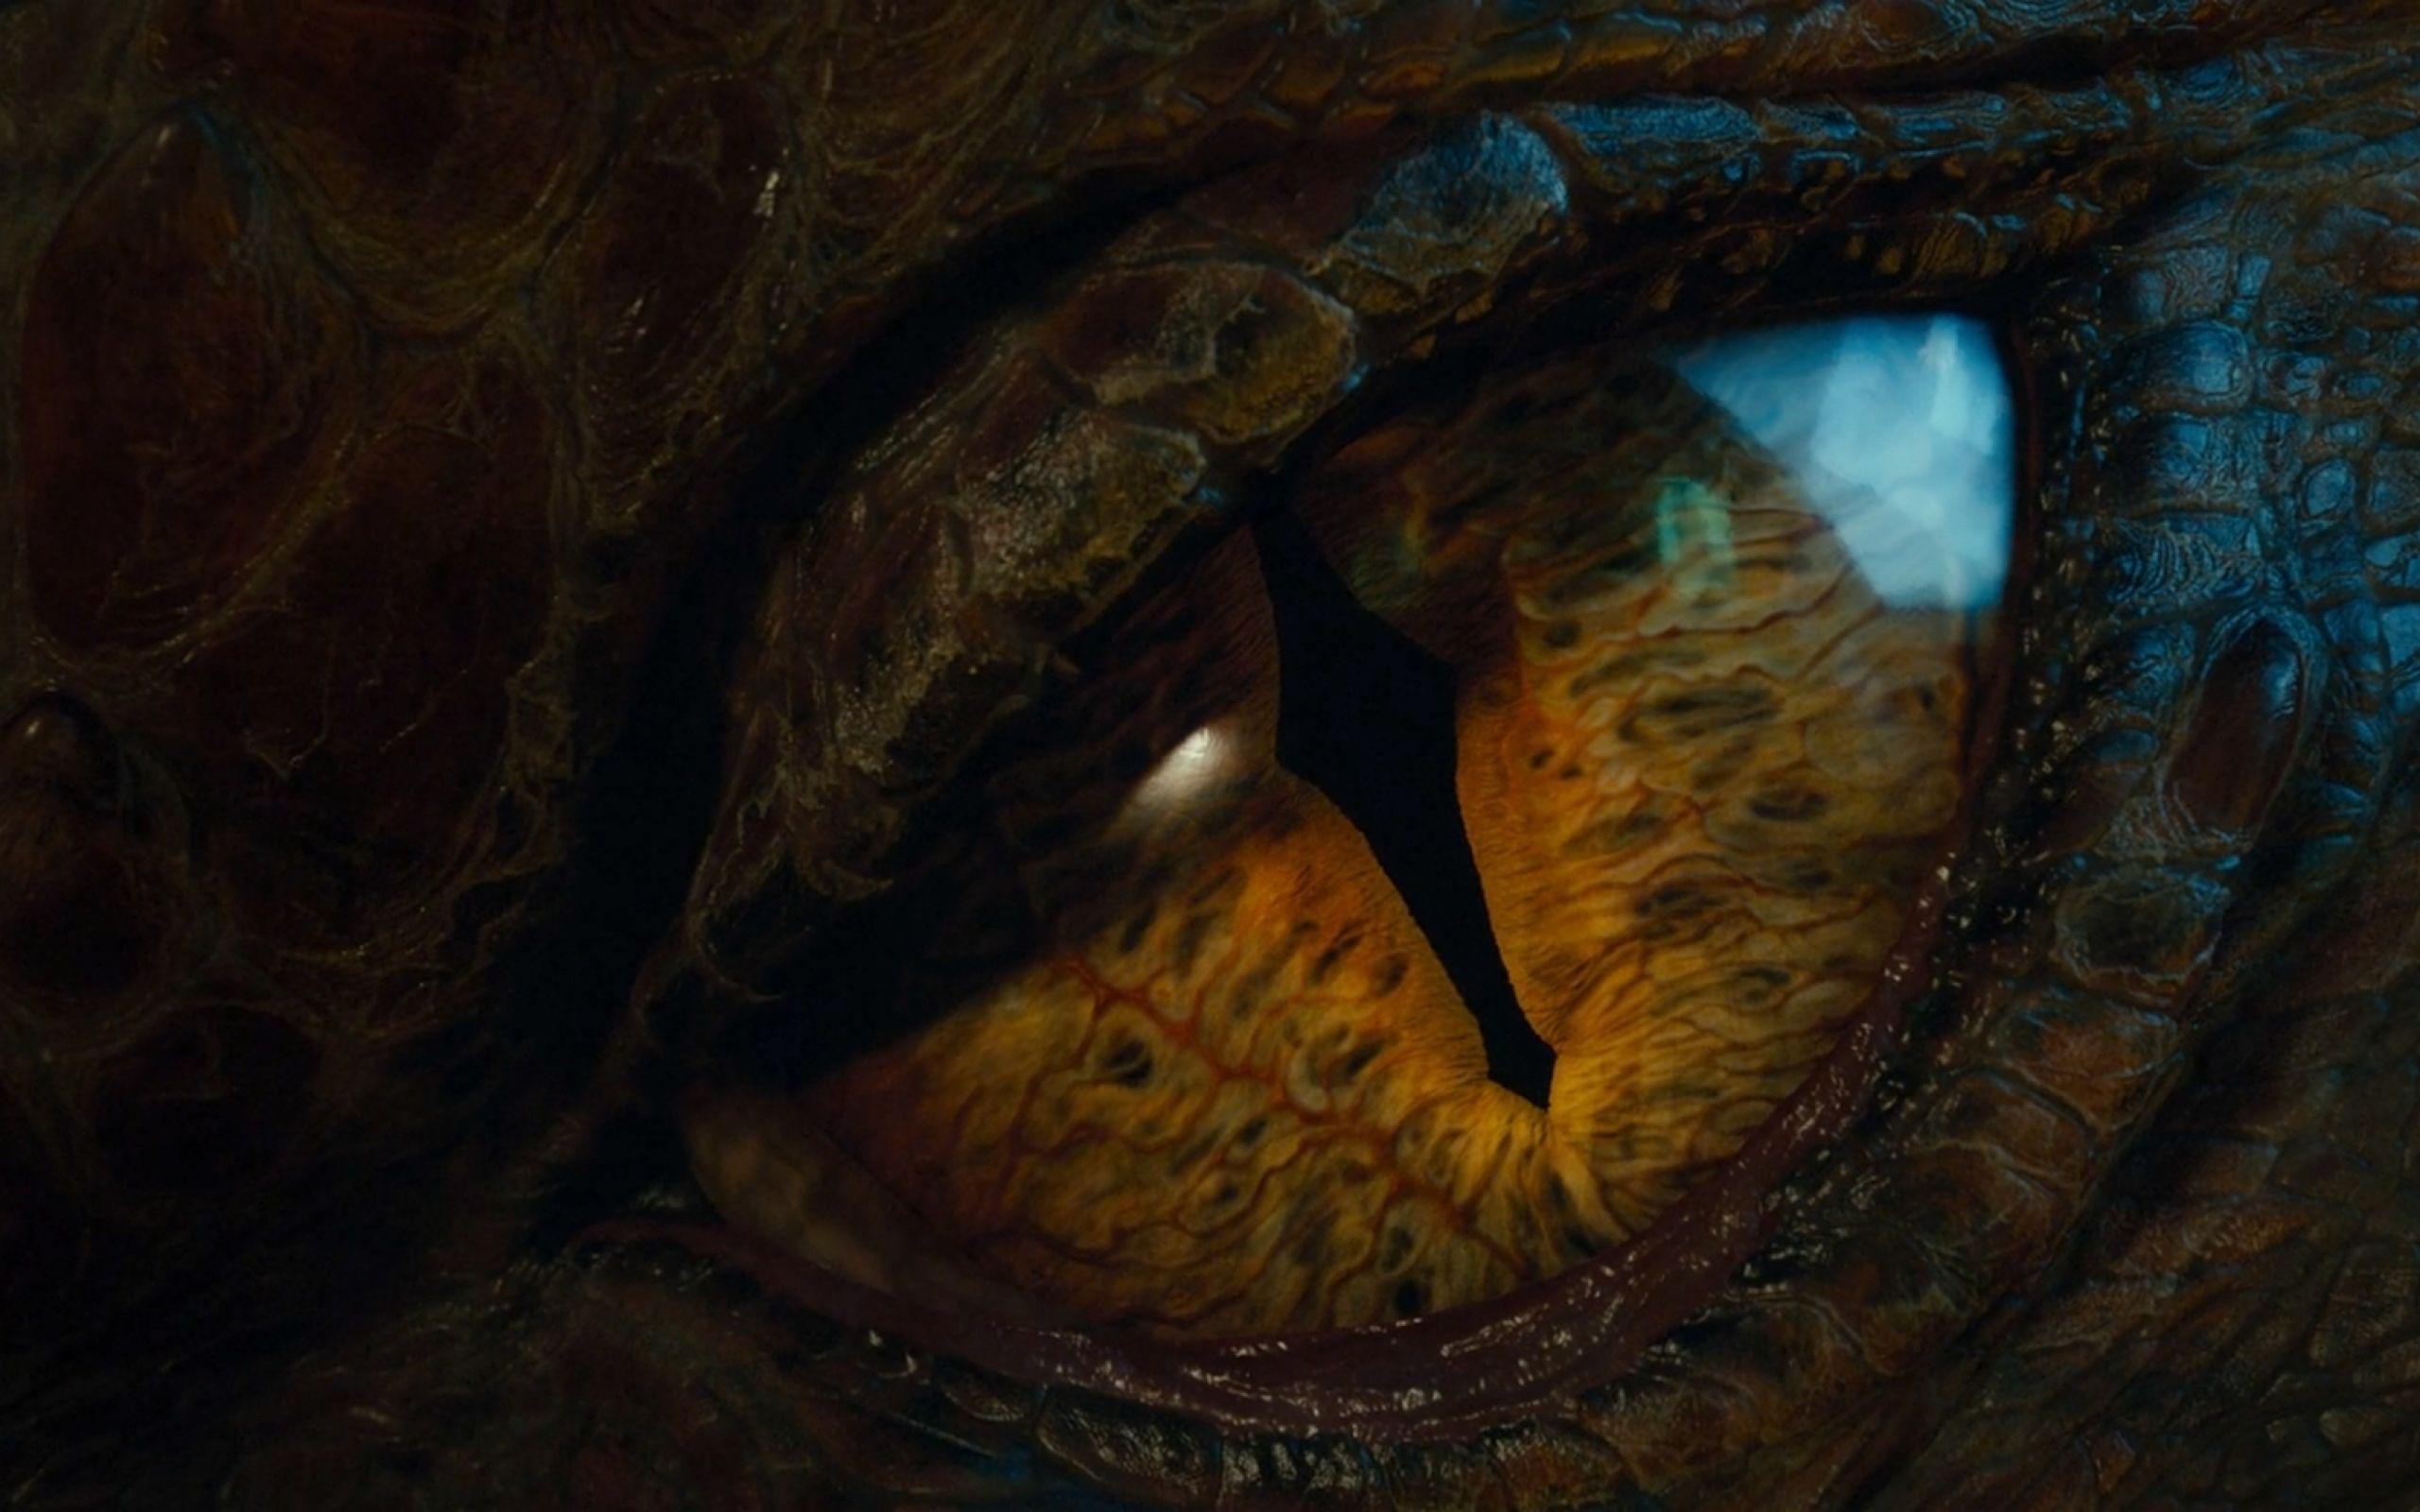 Download Wallpaper, Download 2560x1600 eyes dragons the hobbit